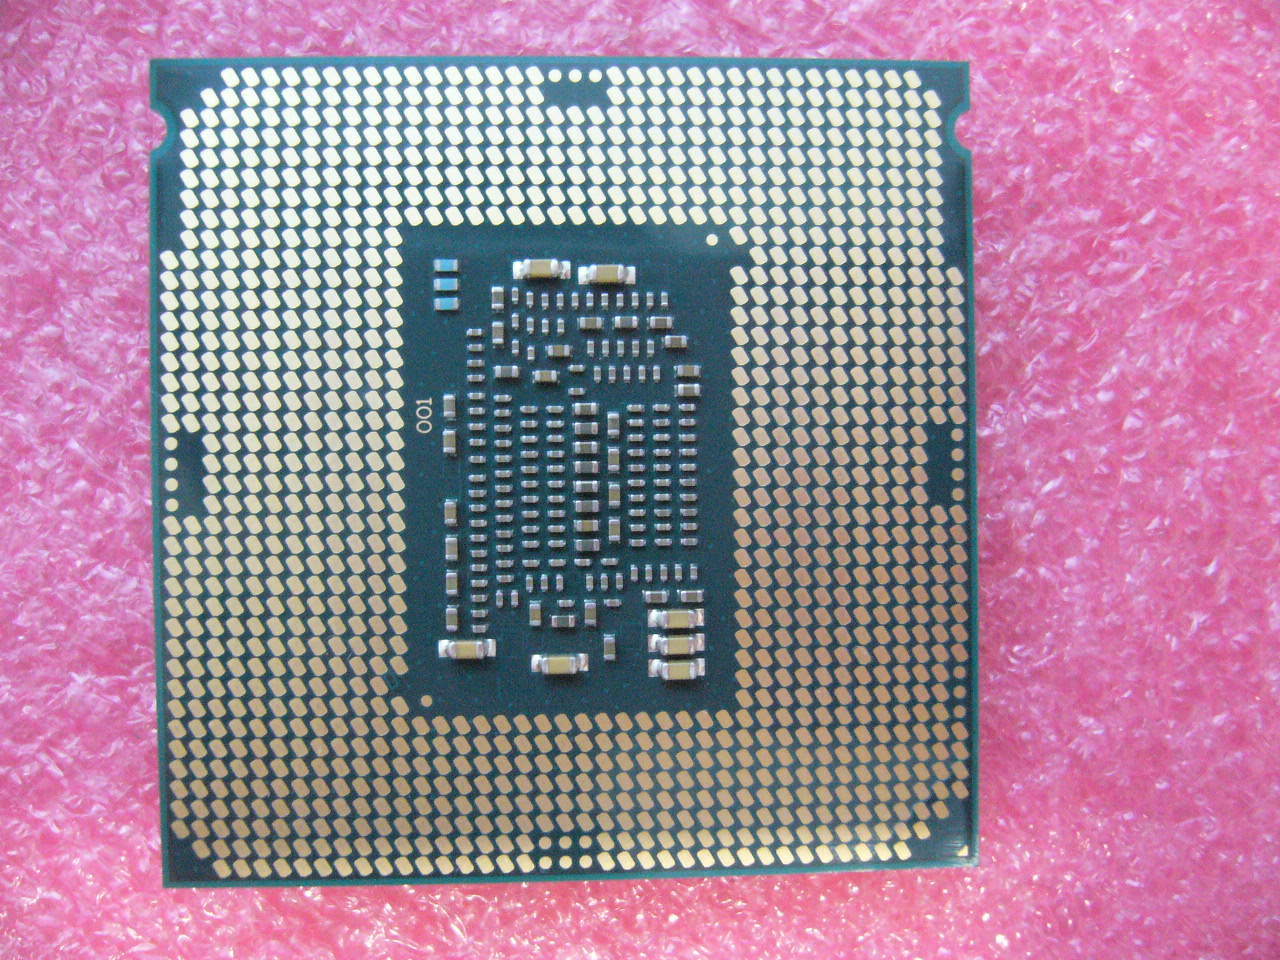 QTY 1x Intel CPU i7-7700 Quad-Cores 3.6Ghz 8MB LGA1151 SR338 PCIE 16x slot not w - Click Image to Close